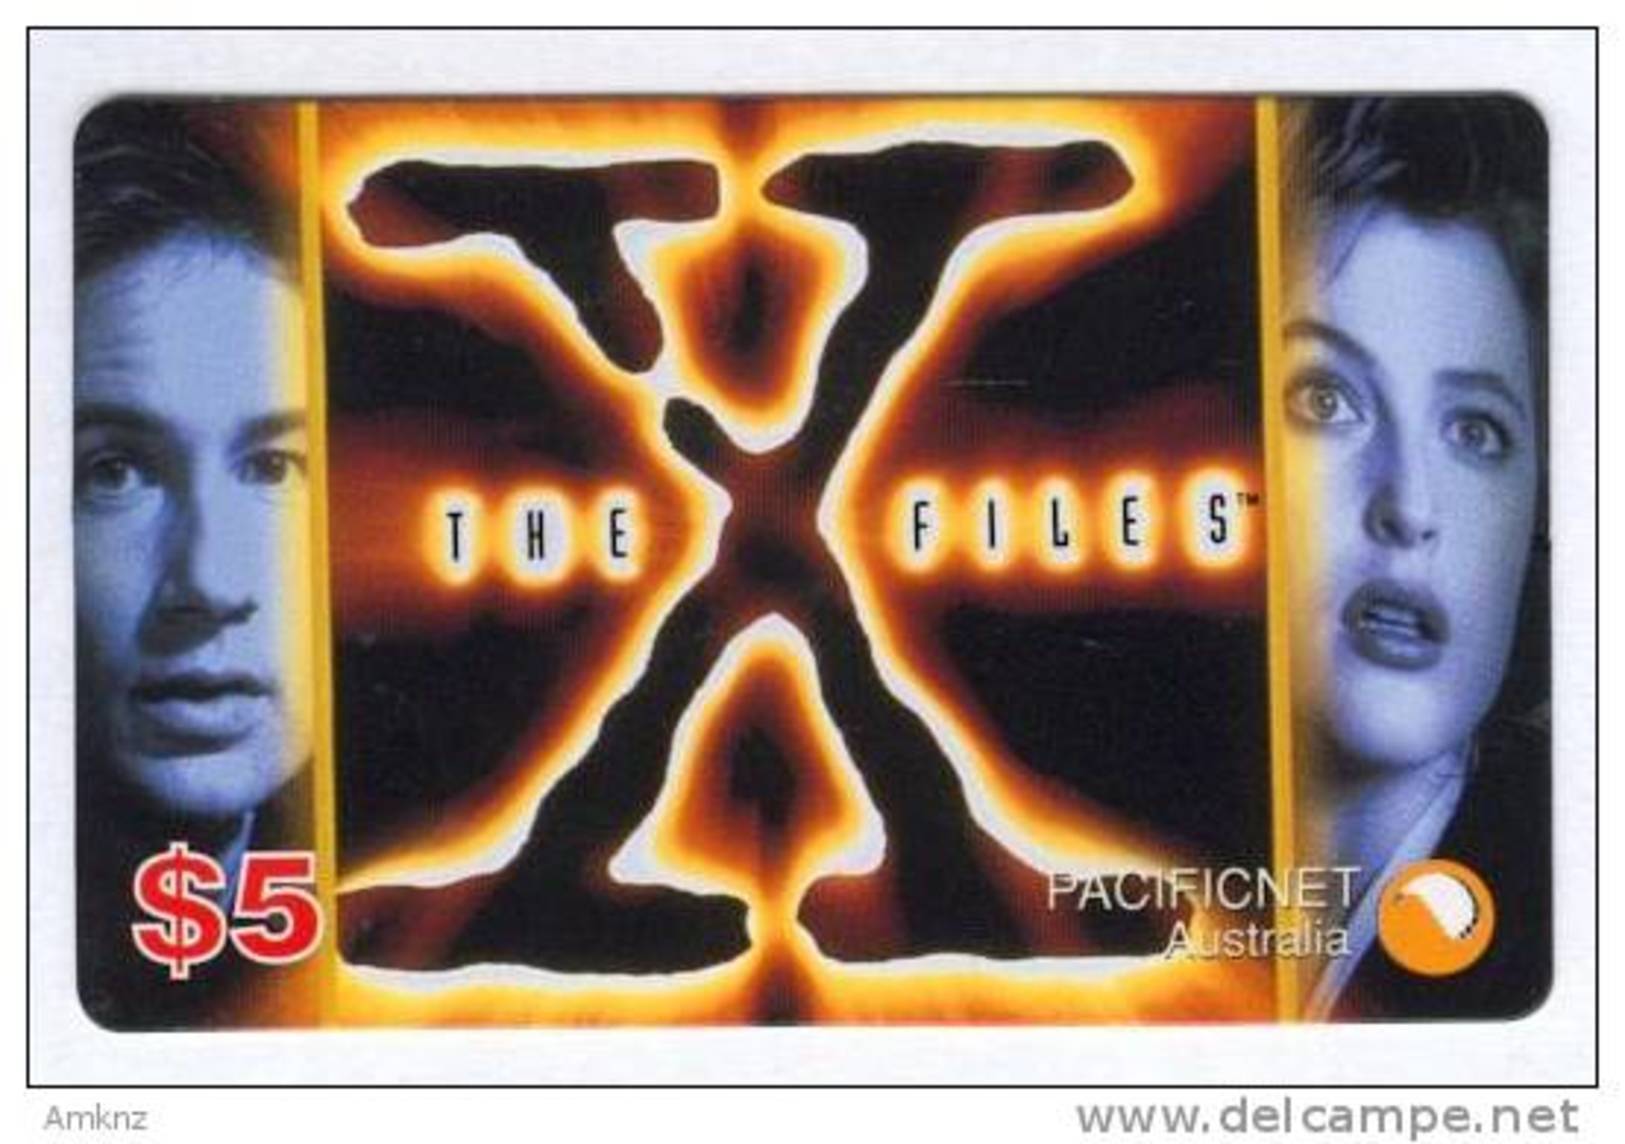 Australia - PacificNet - 1996 The X-Files 4 $5 Logo - Mint - Australia